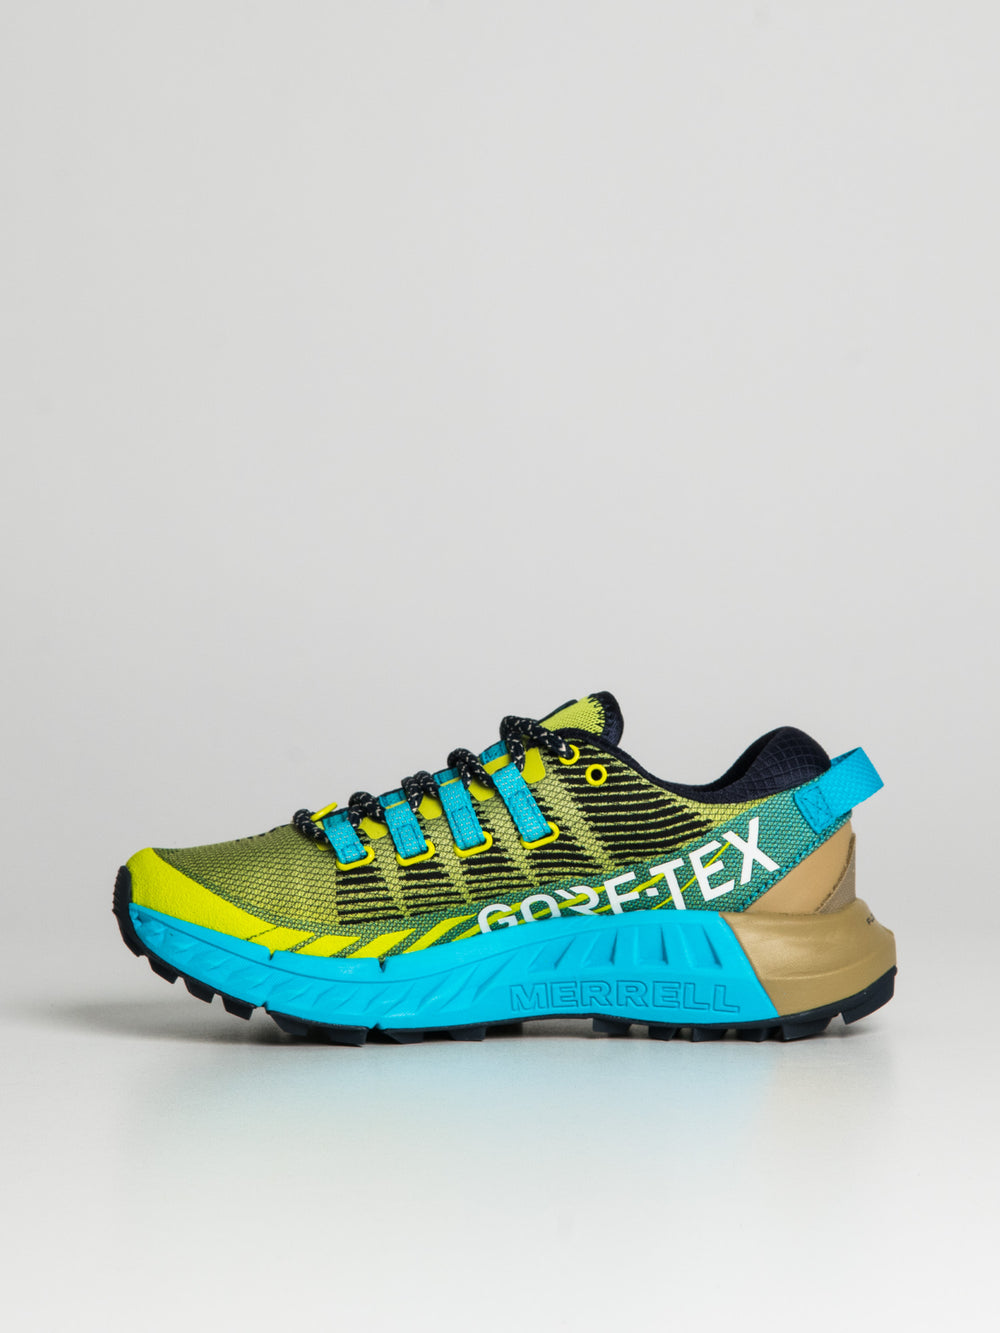 Merrell - Women's Agility Peak 4 Trail Running Shoes